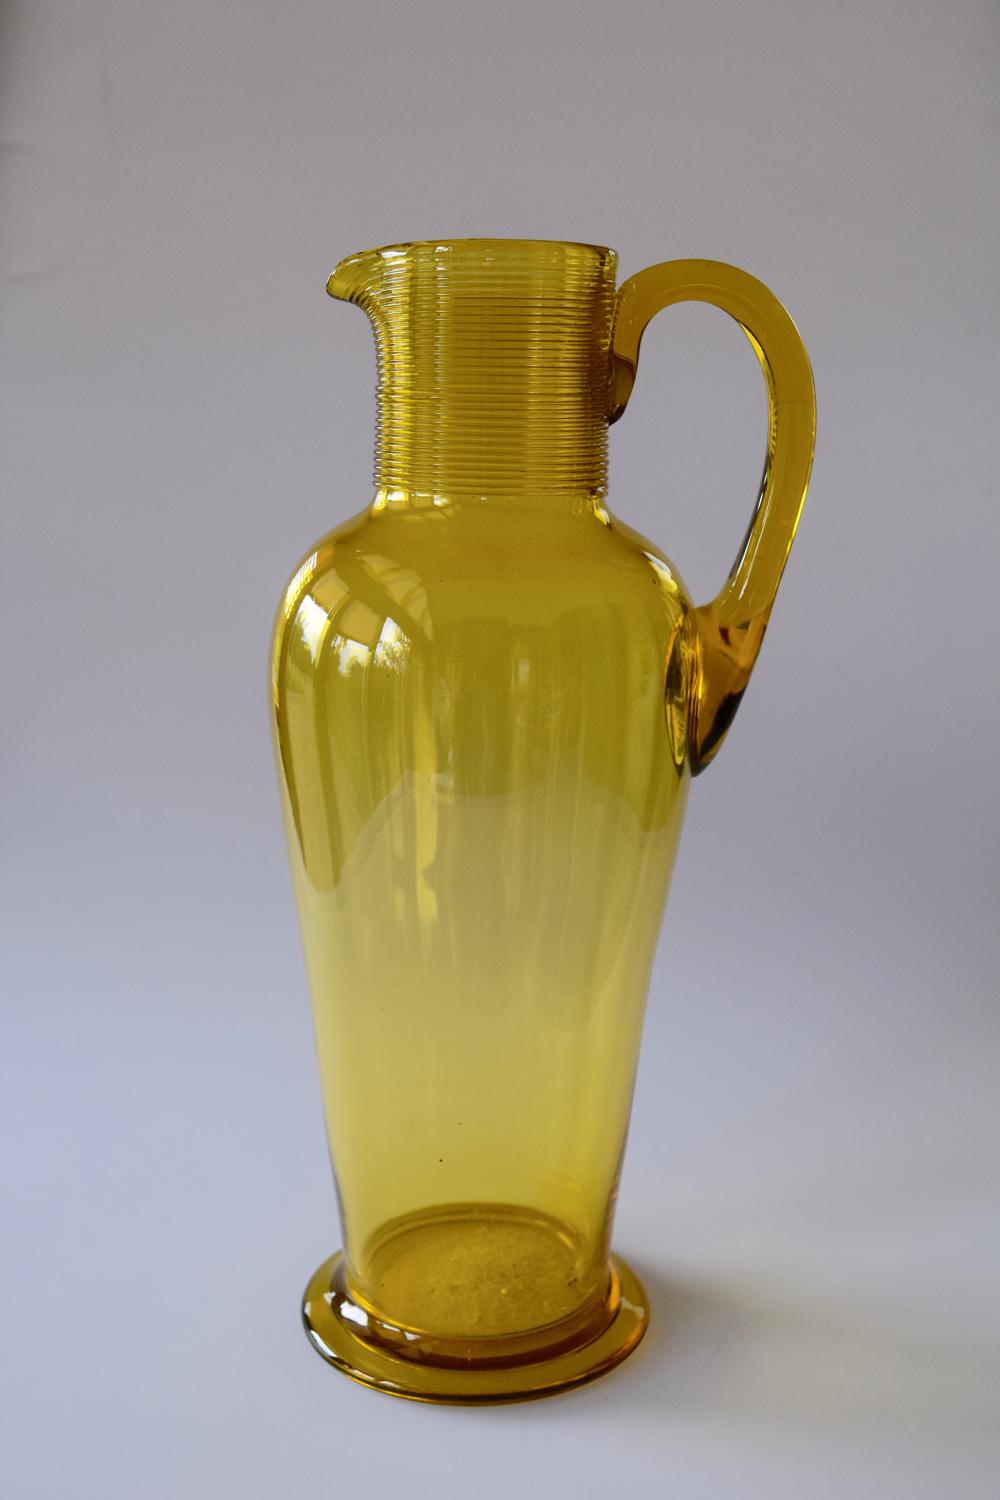 Rare yellow jug by James Powell